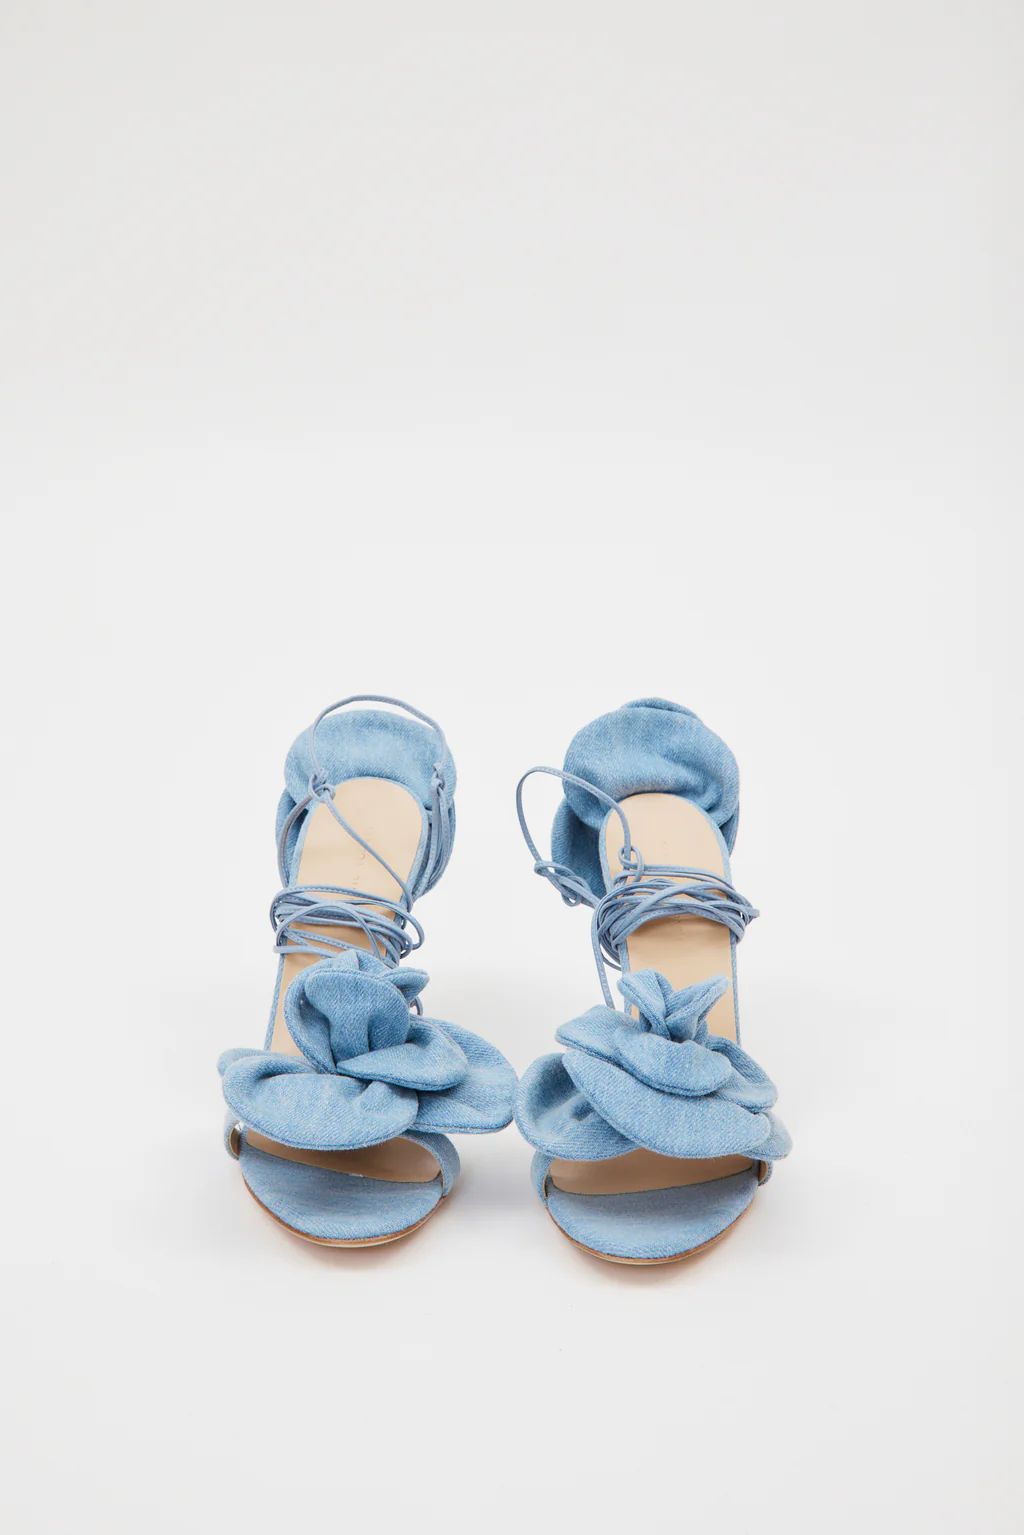 Double Flower Blue Denim Heel Sandals | Desordre